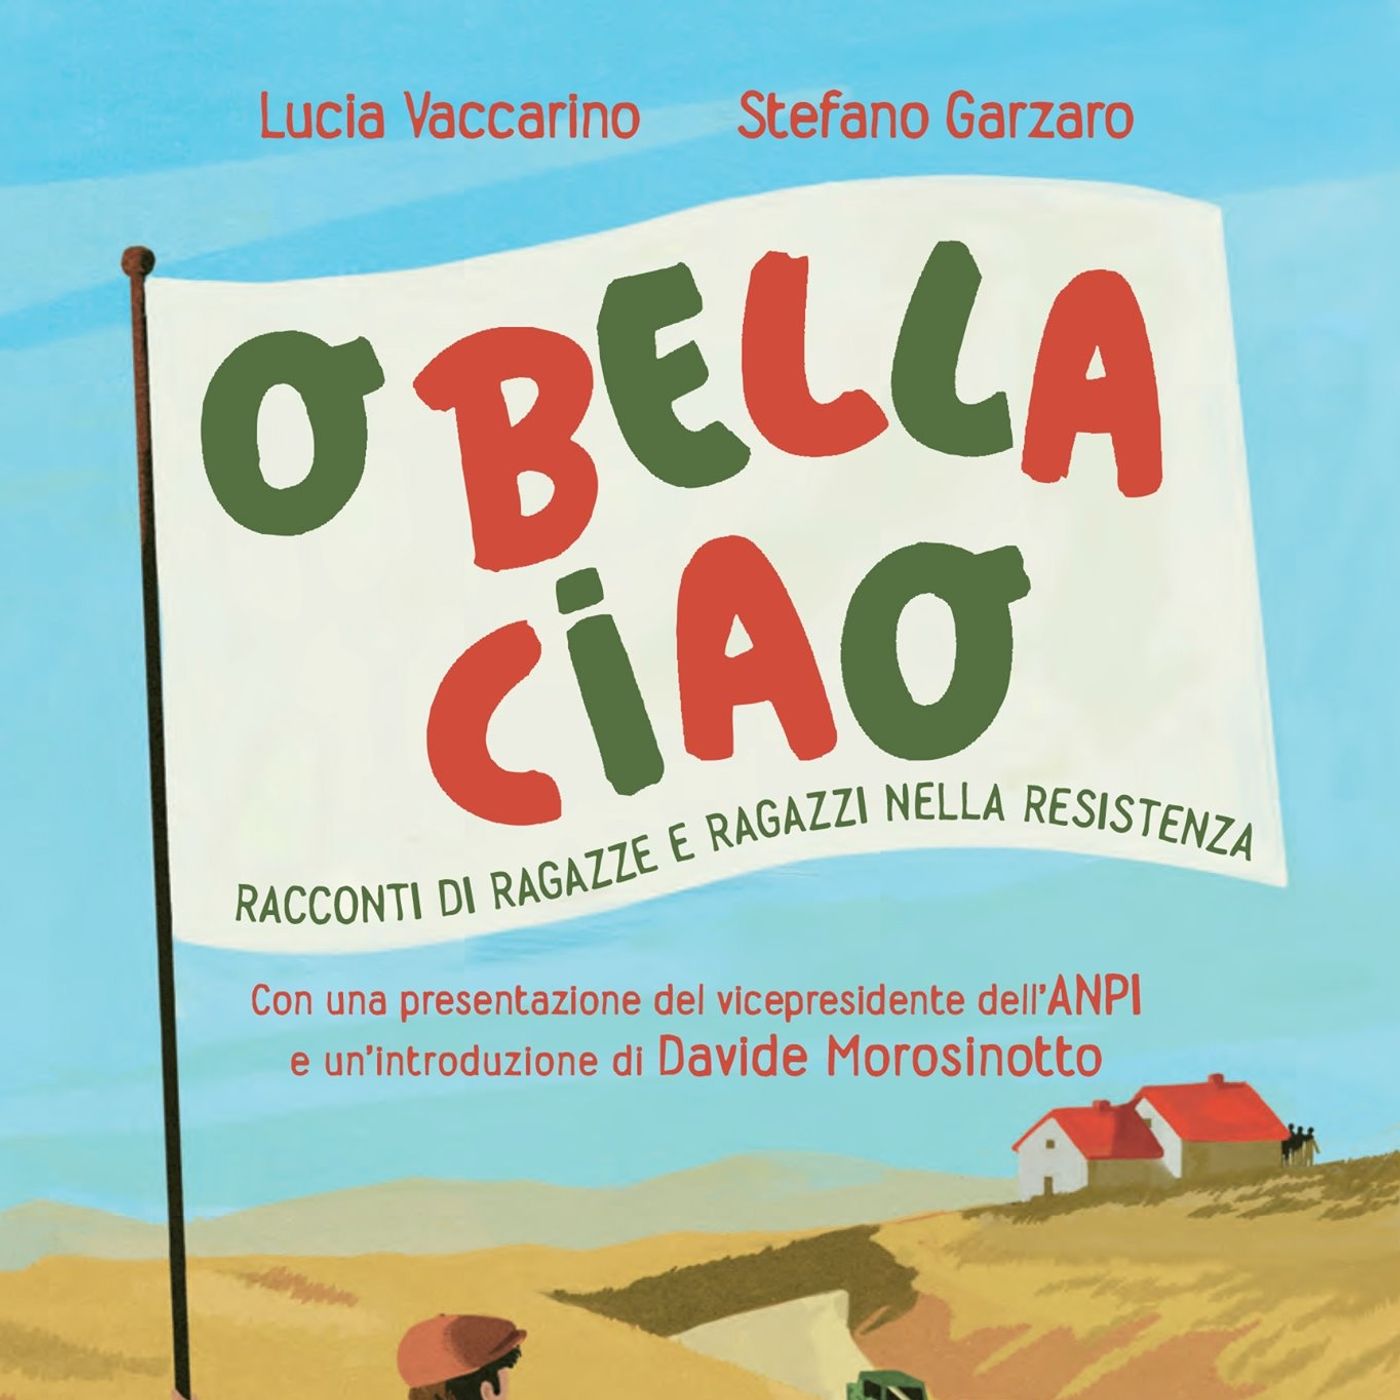 Intervista a Stefano Garzaro autore del libro "O Bella Ciao"